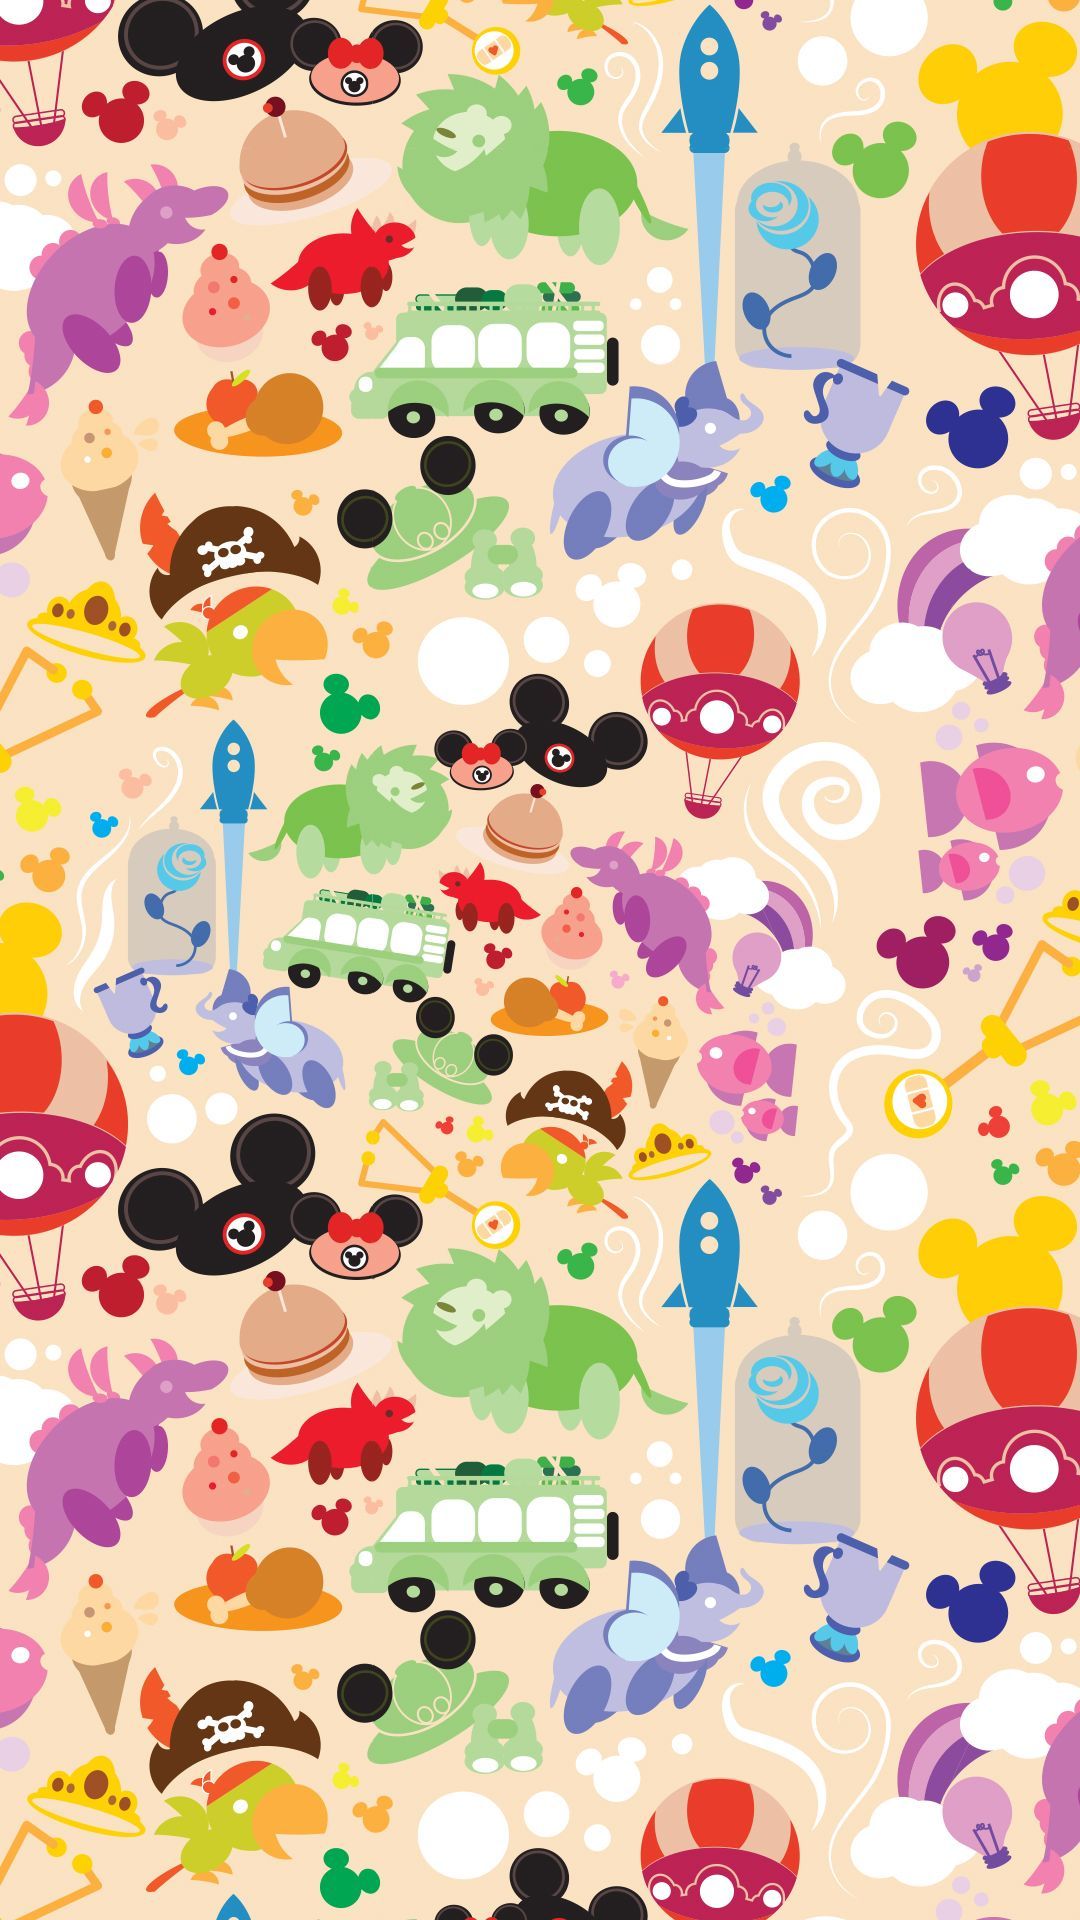 Disney Princess Wallpapers HD Resolución »Hupages» Descargar Iphone